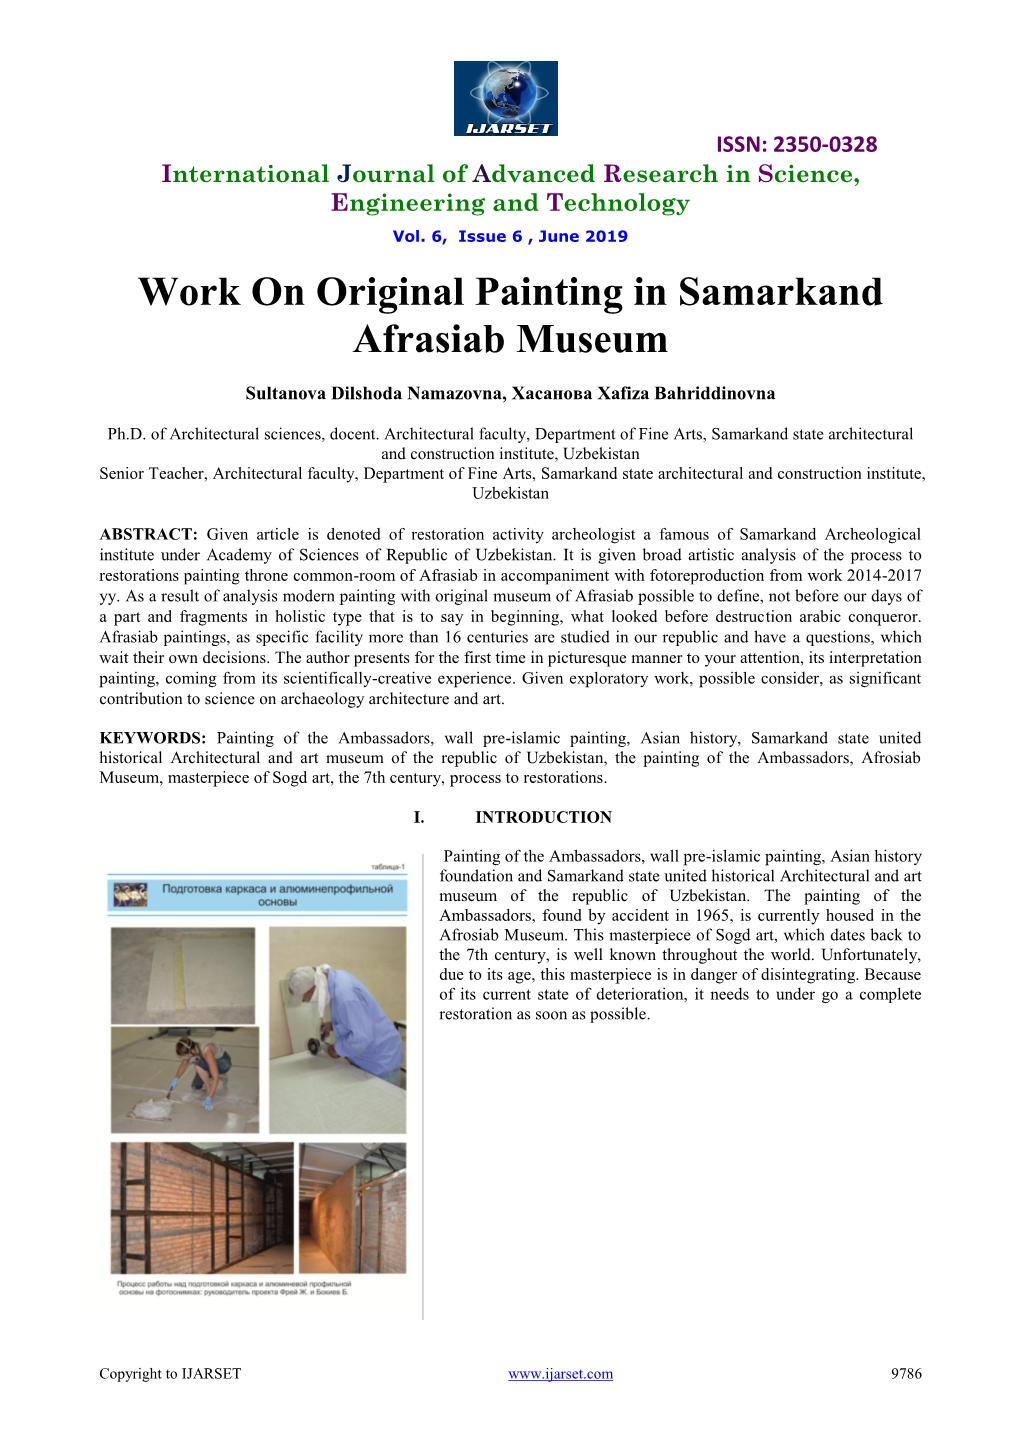 Work on Original Painting in Samarkand Afrasiab Museum